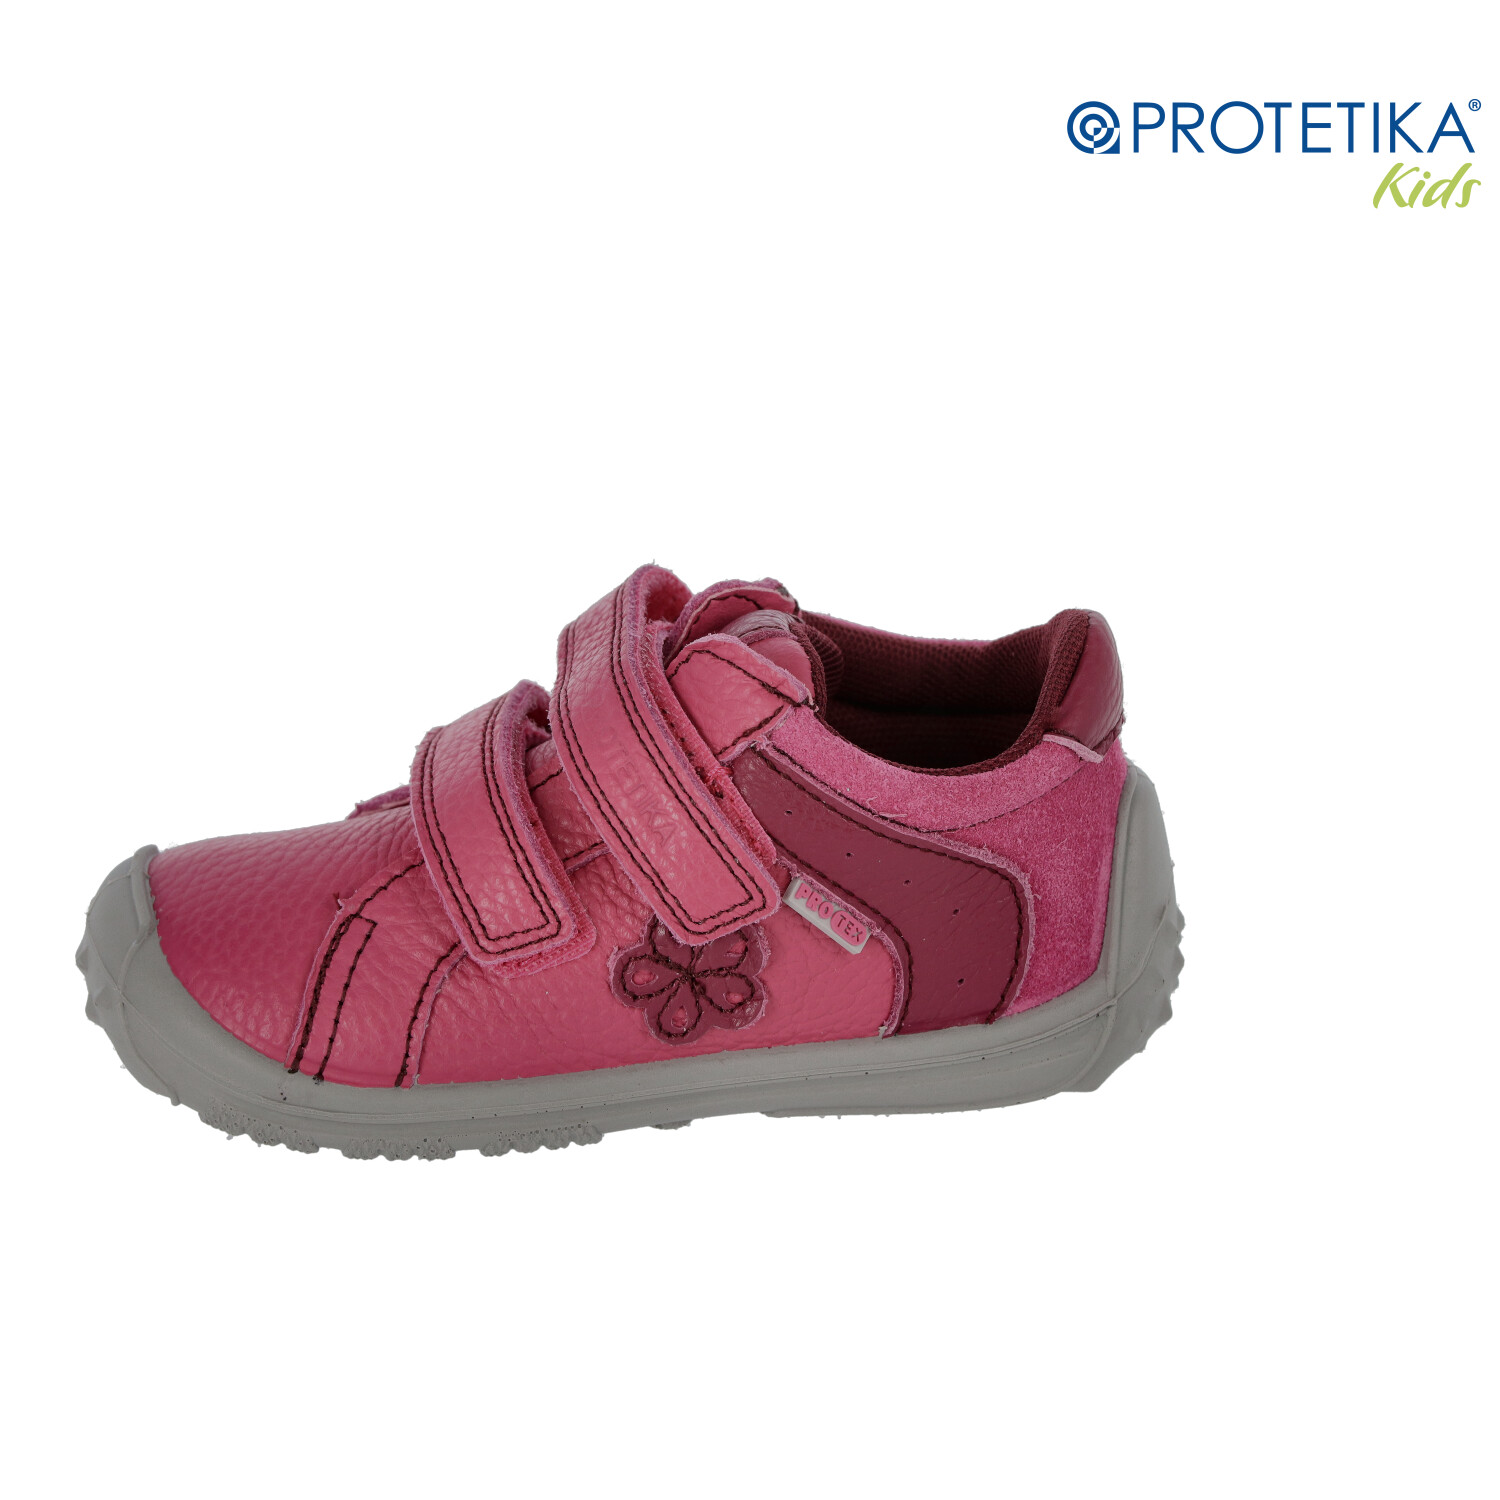 Protetika - topánky s membránou PRO-tex RIANA